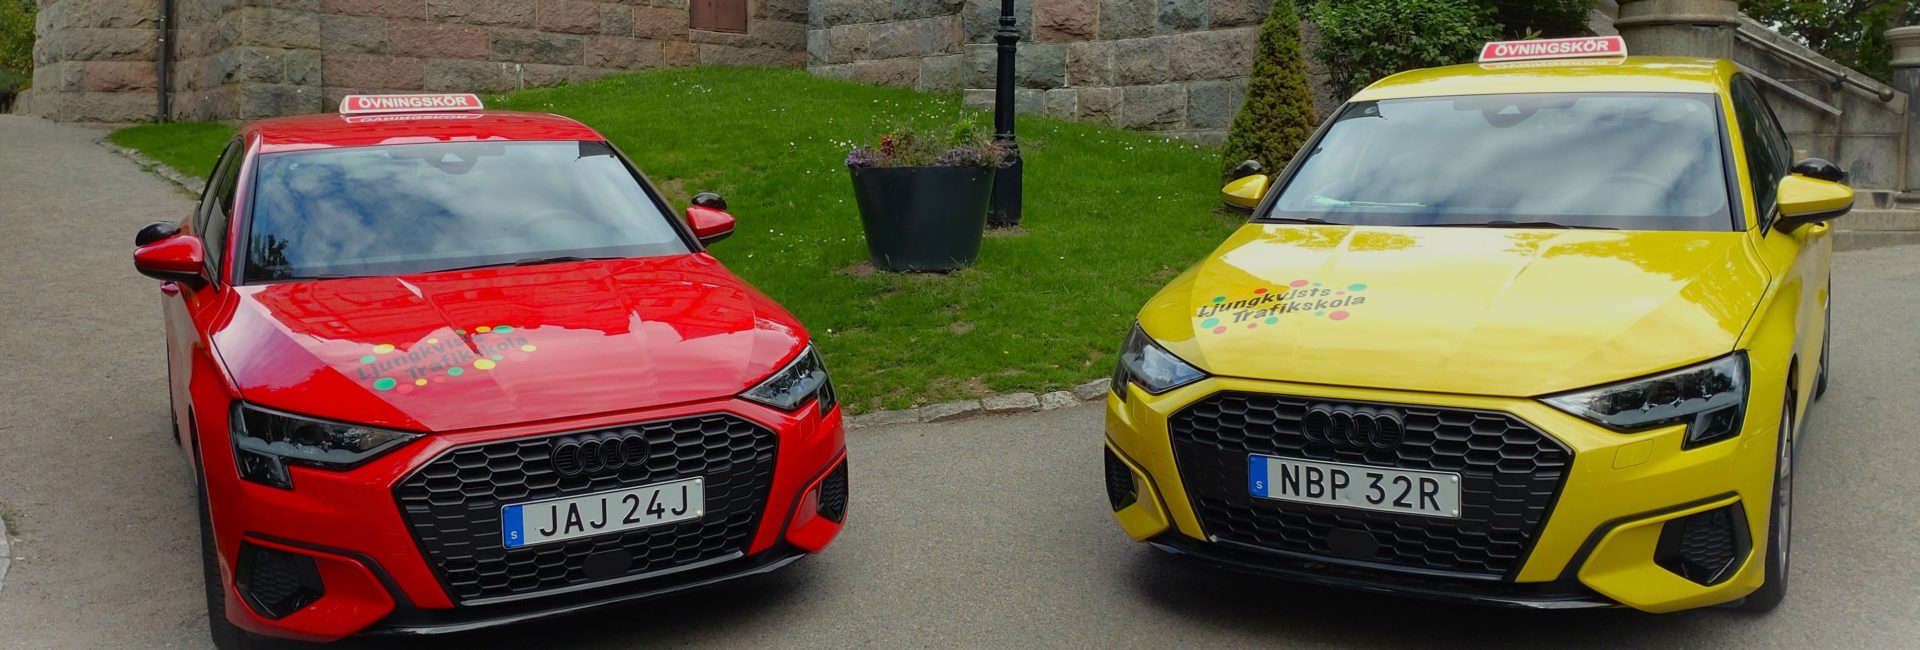 röd + gul bil, fram, slottet - mindre2